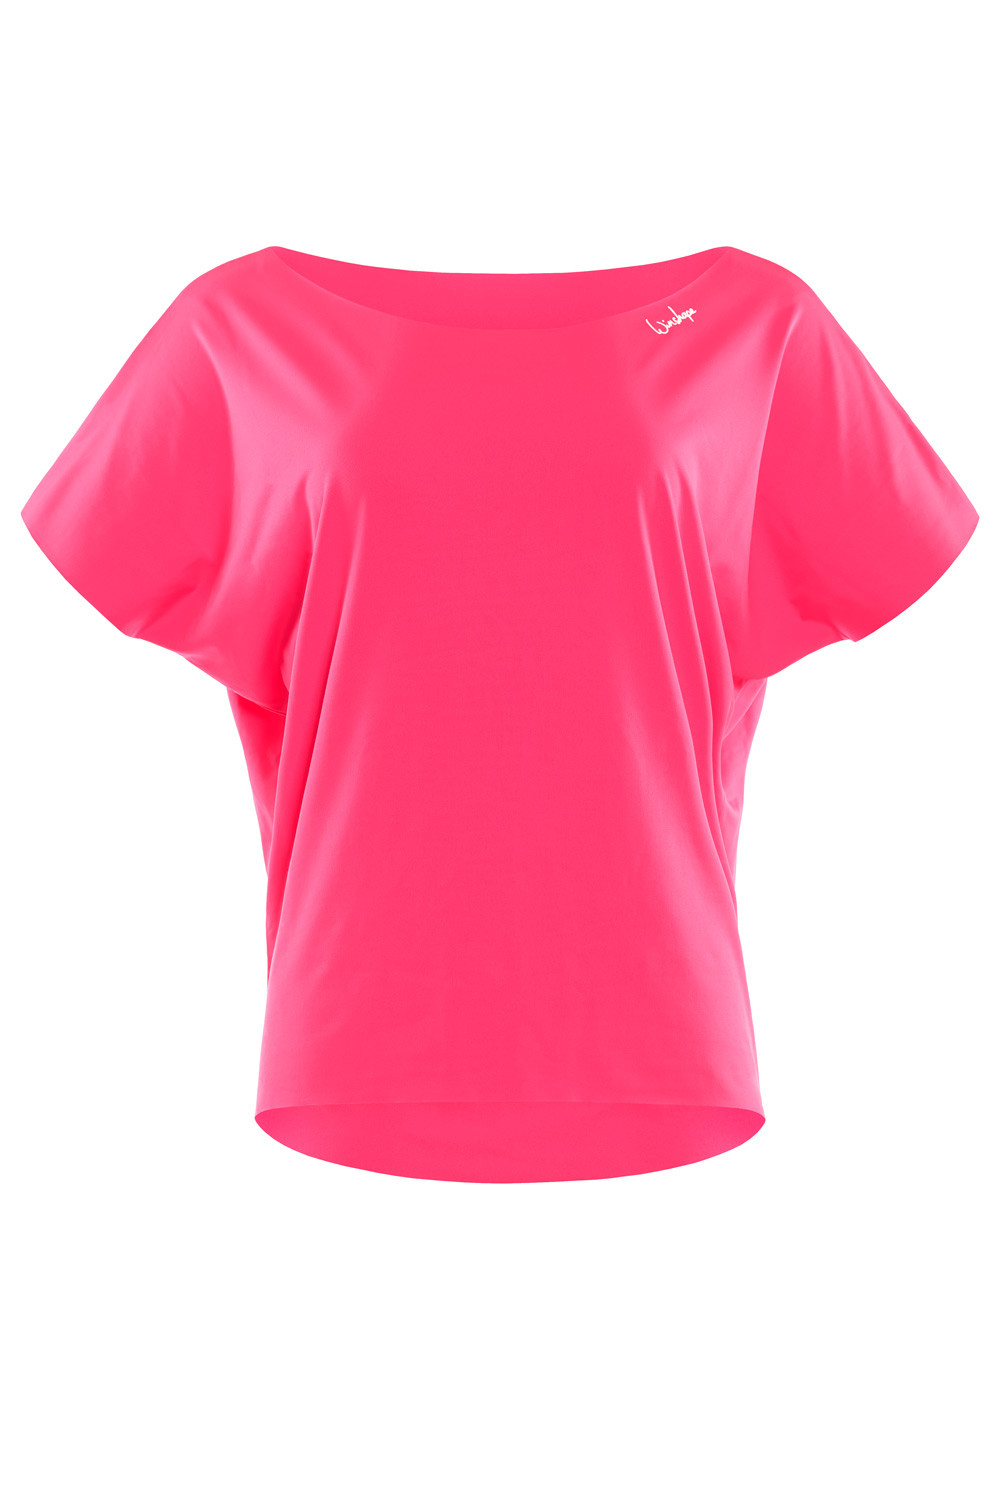 Functional Light pink, neon Dance Style DT101, Winshape Dance-Top